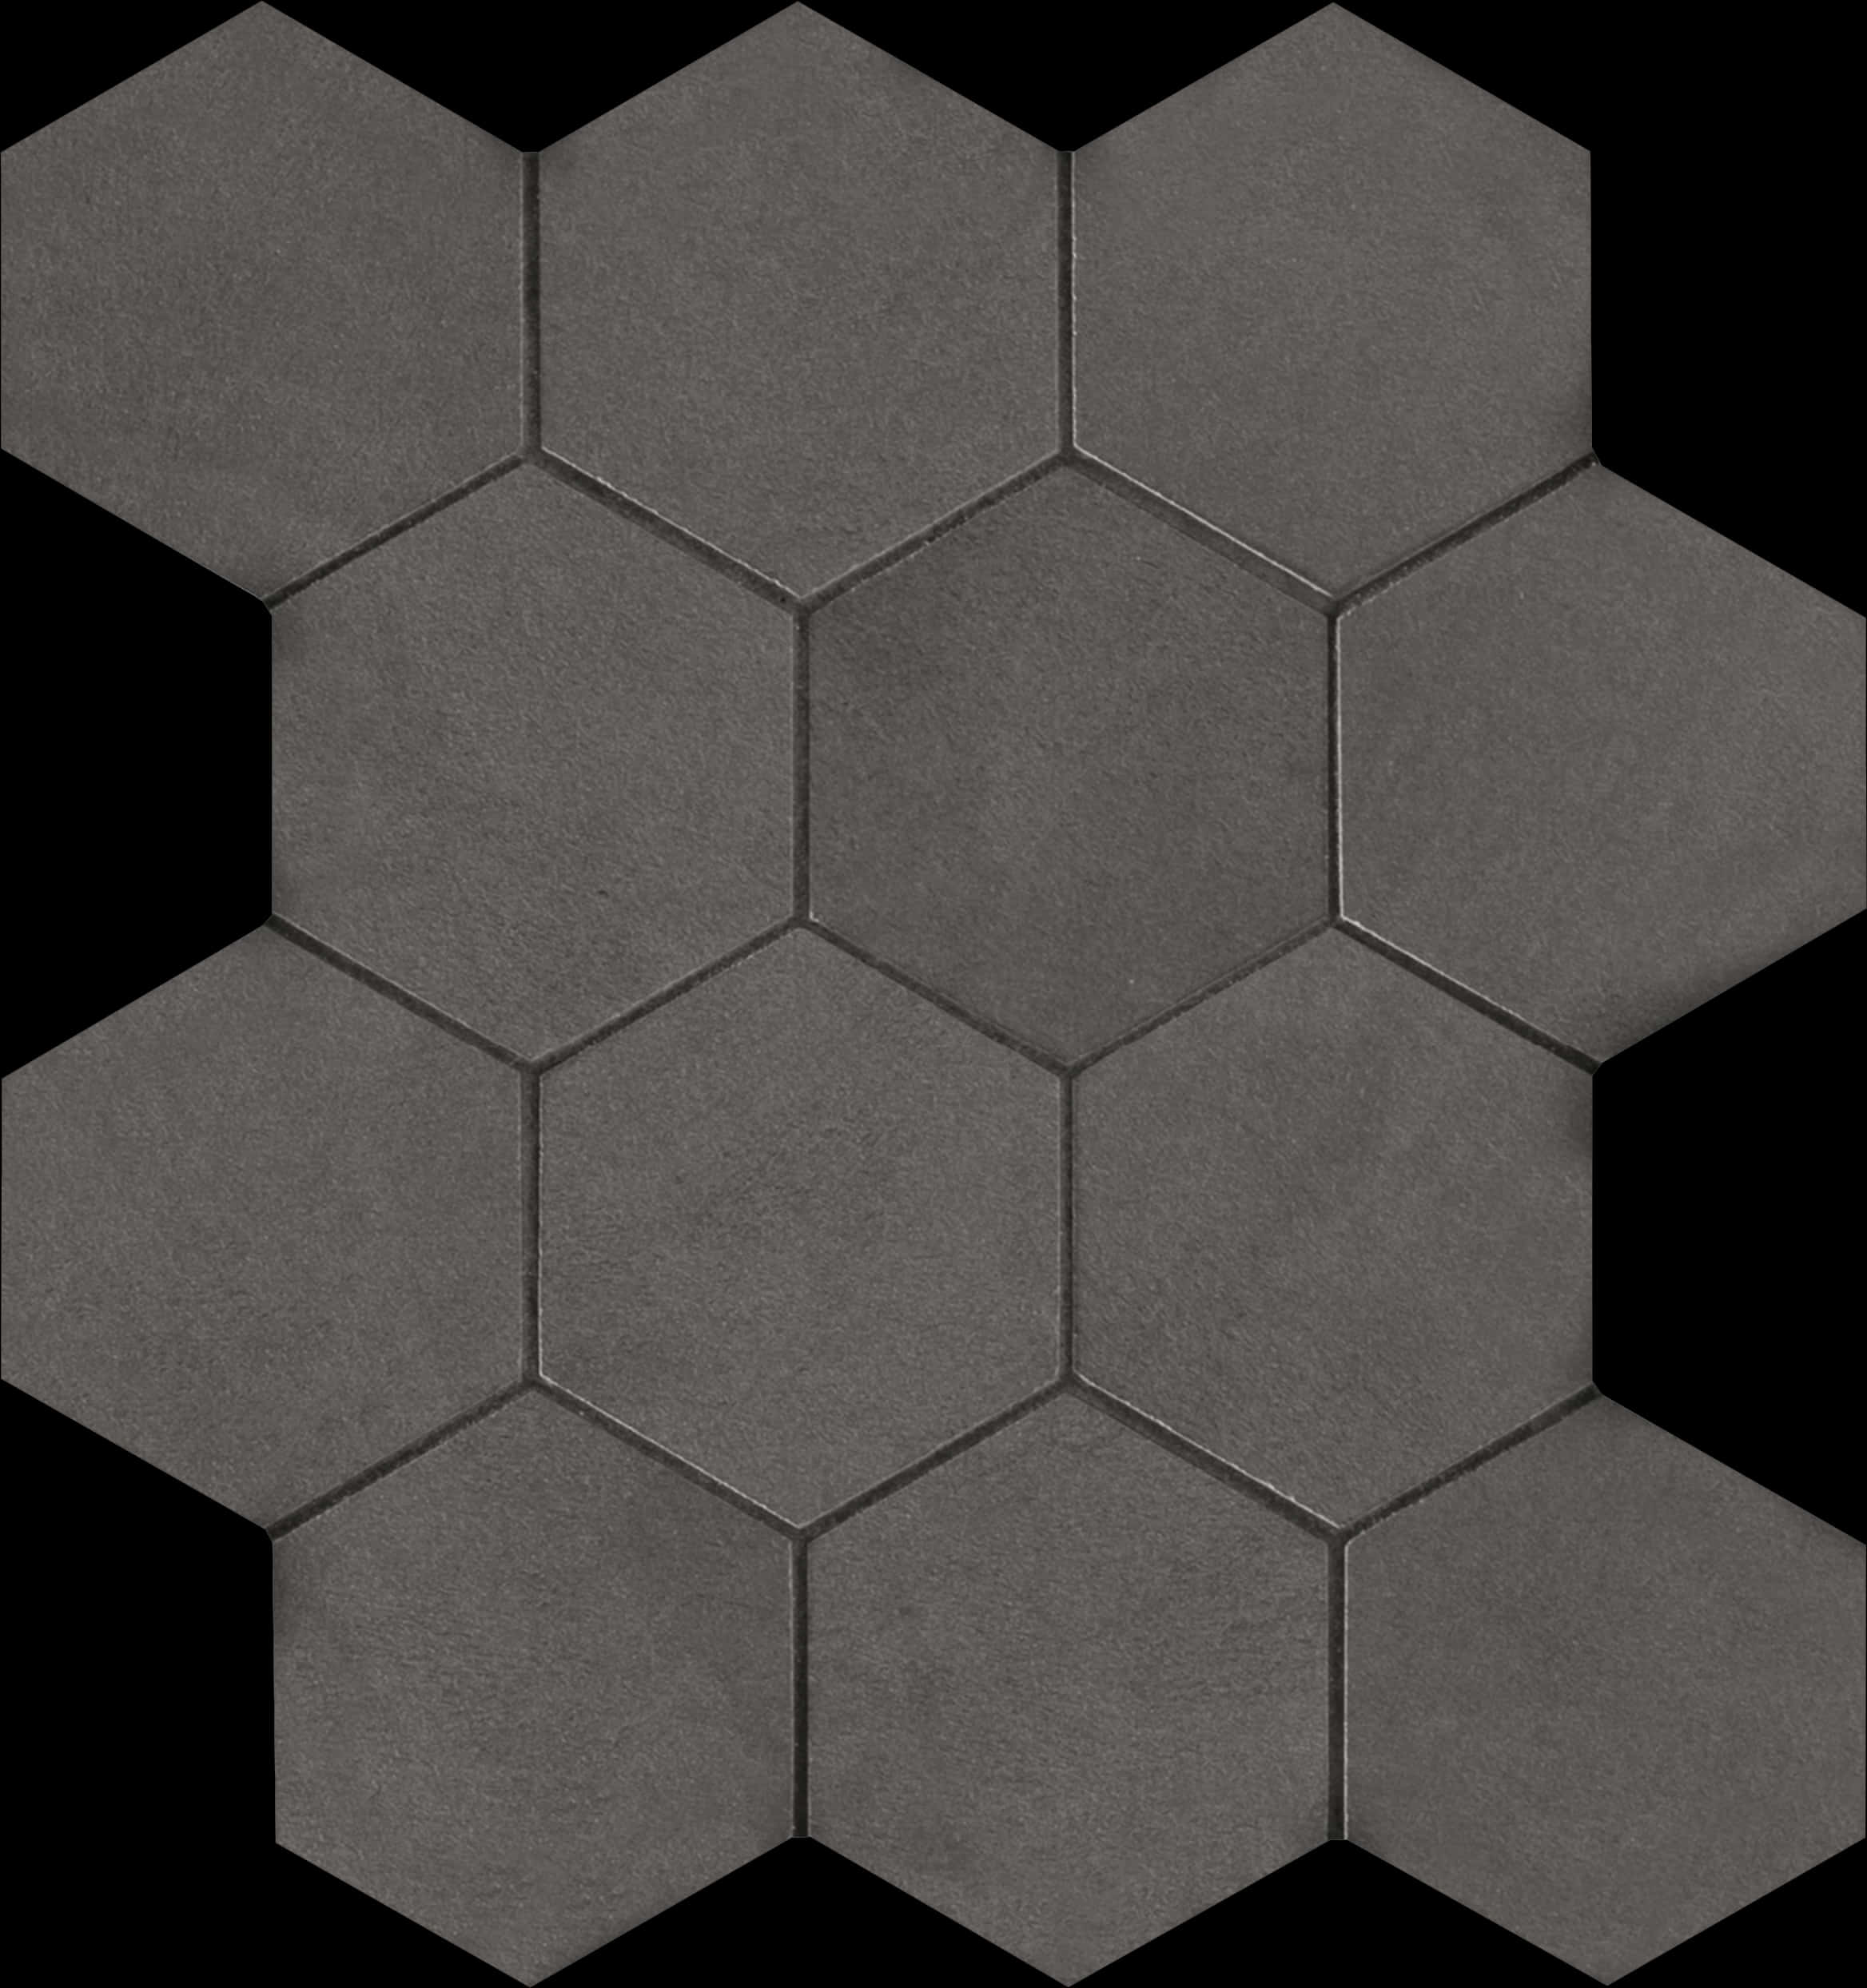 Abstract Hexagonal Tiles Pattern PNG